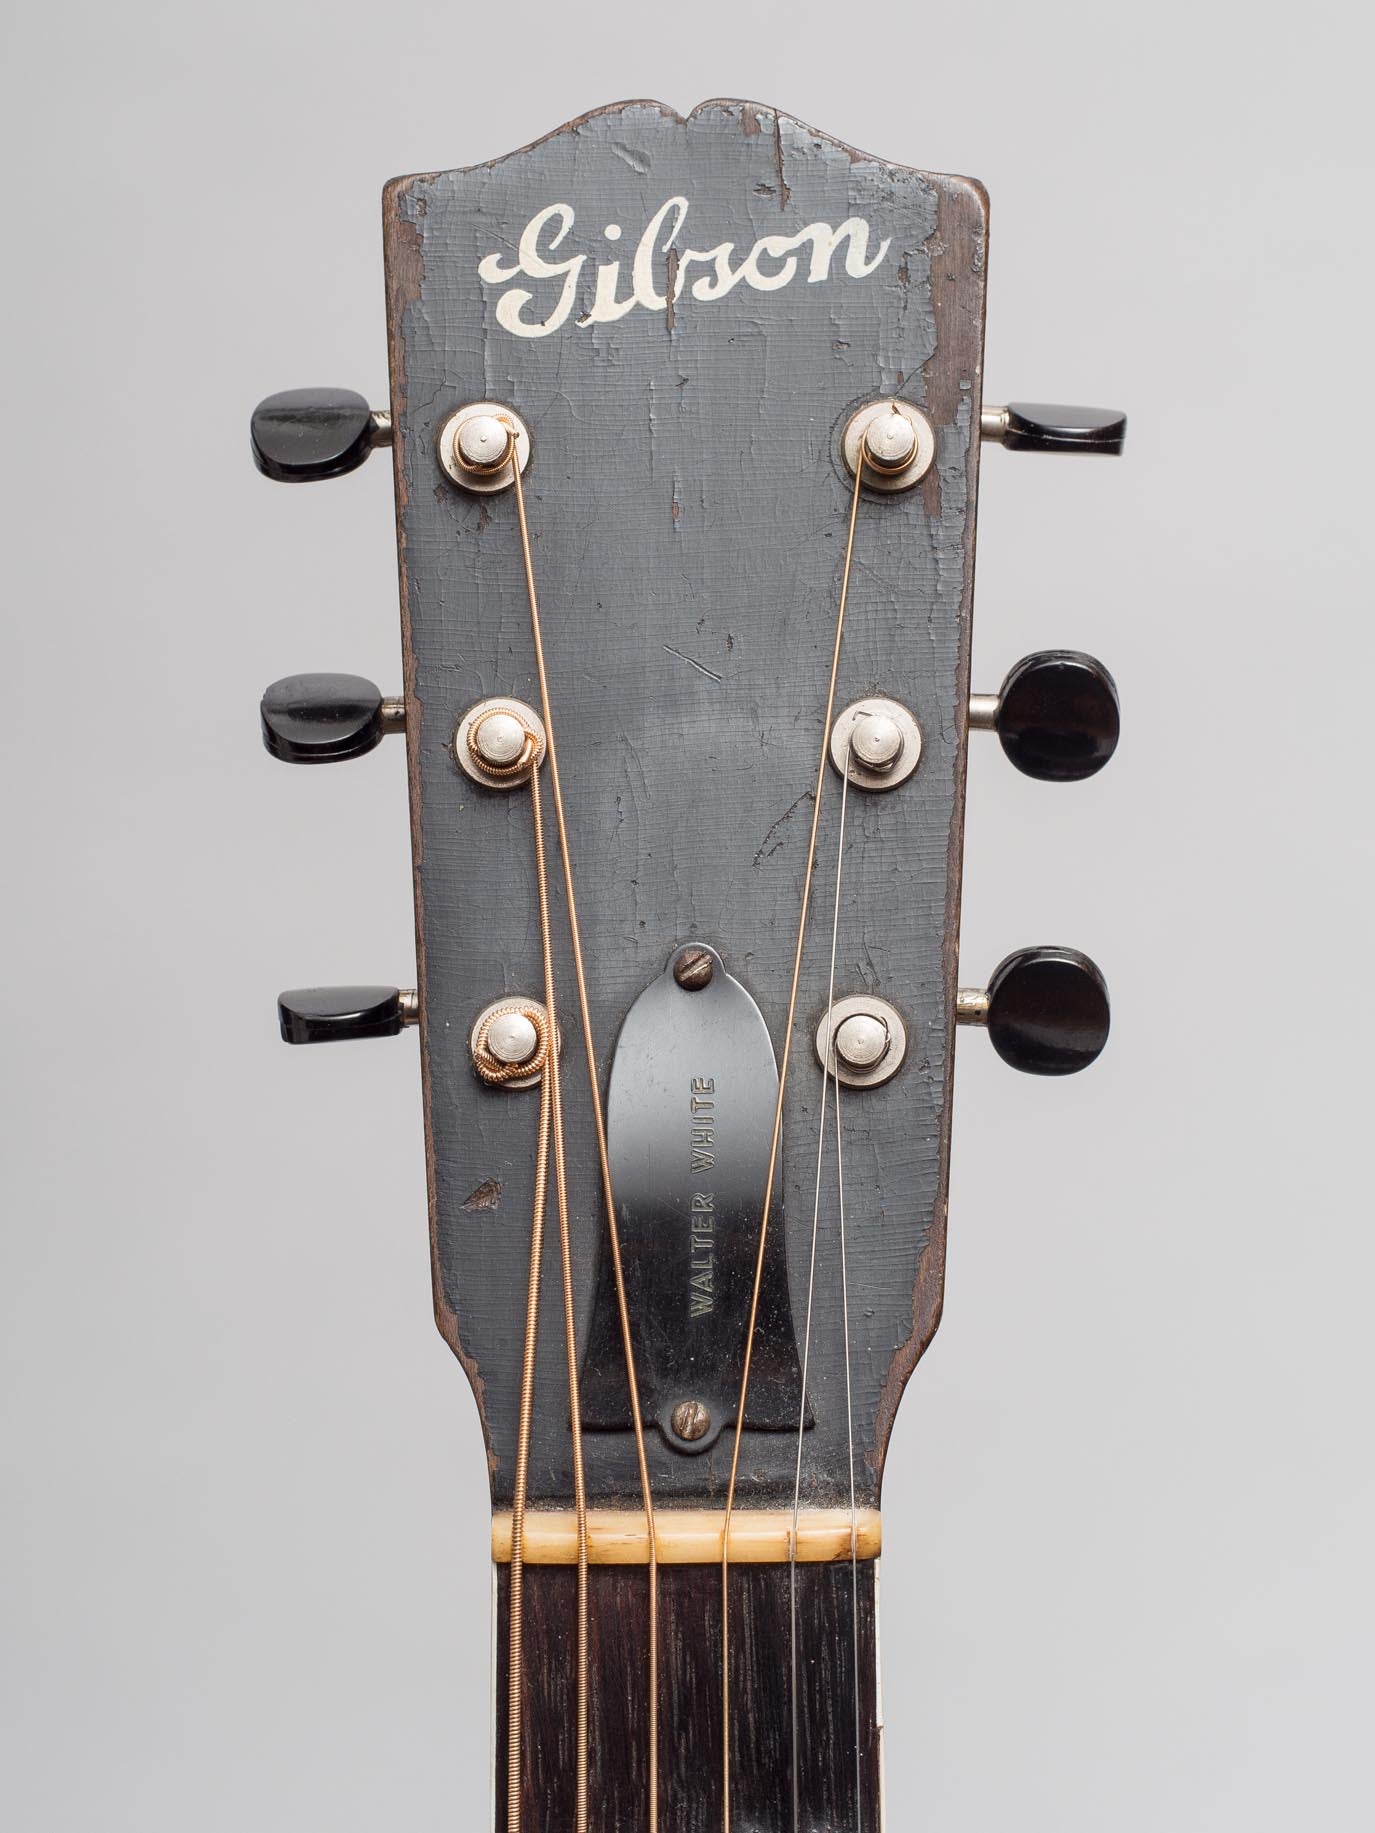 1929 Gibson L-2 Walter White